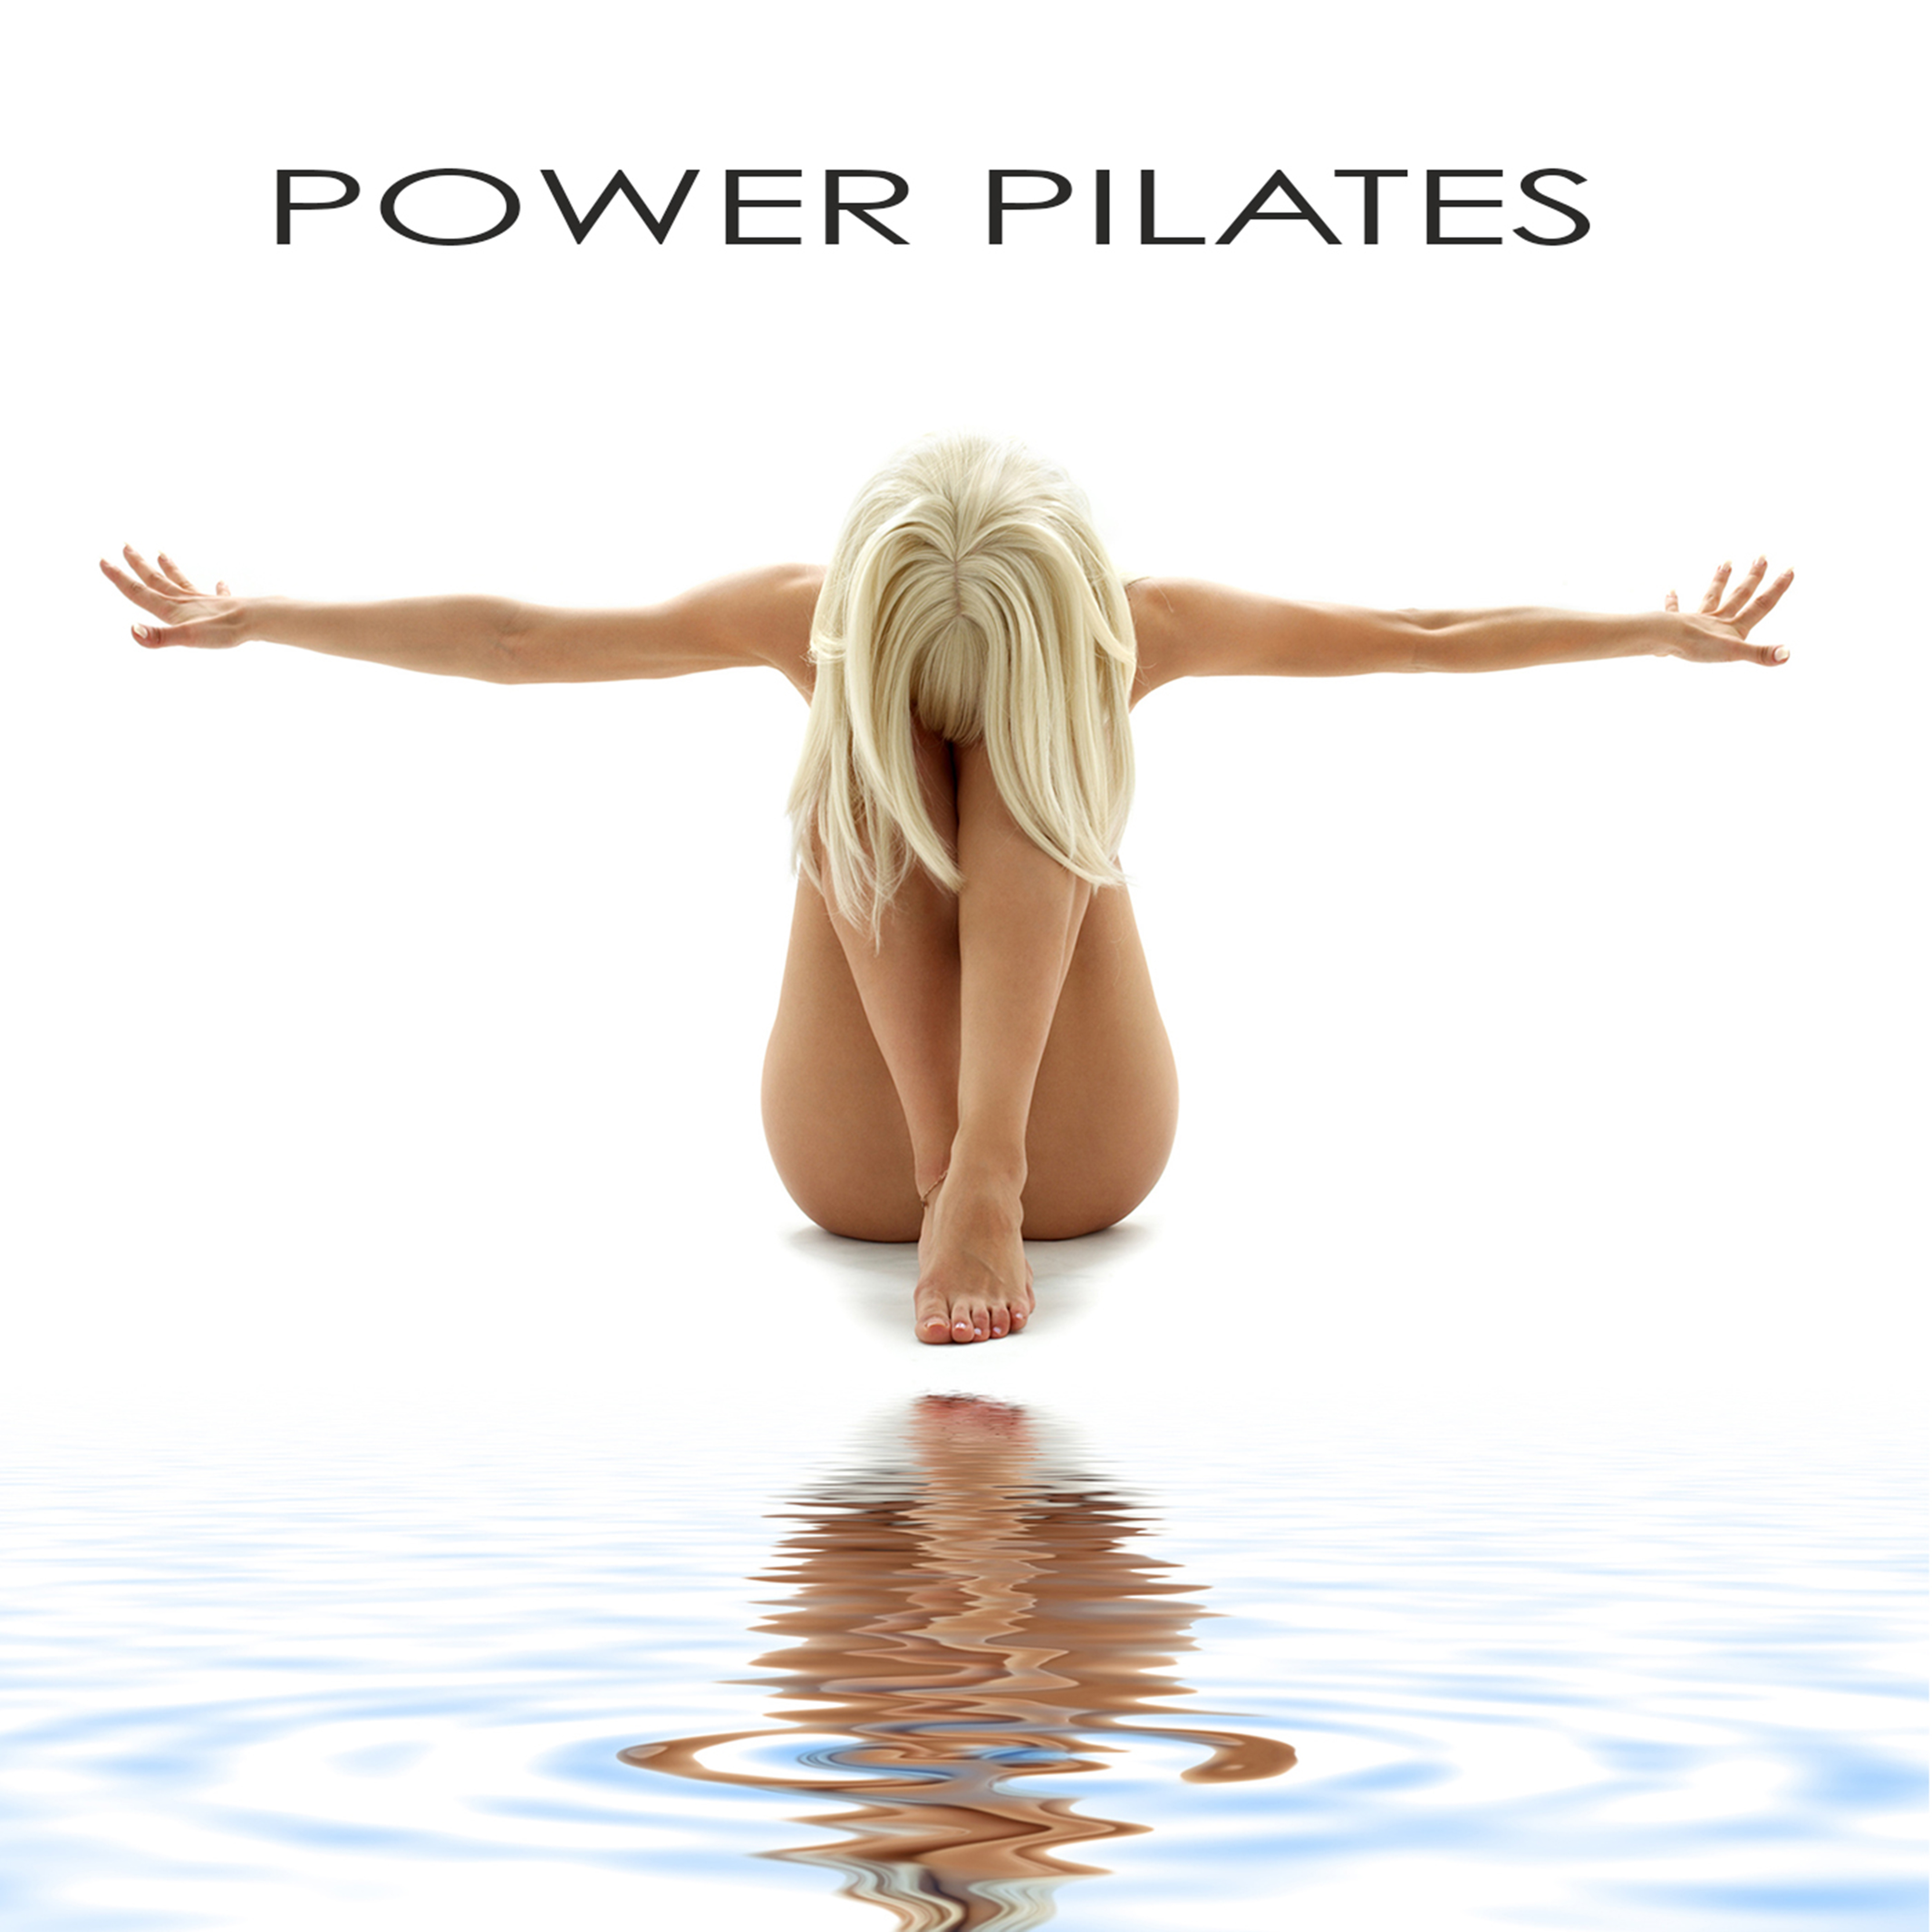 Power Pilates - Instrumental Jazz & Lounge Music for Power Pilates In Pilates Studio